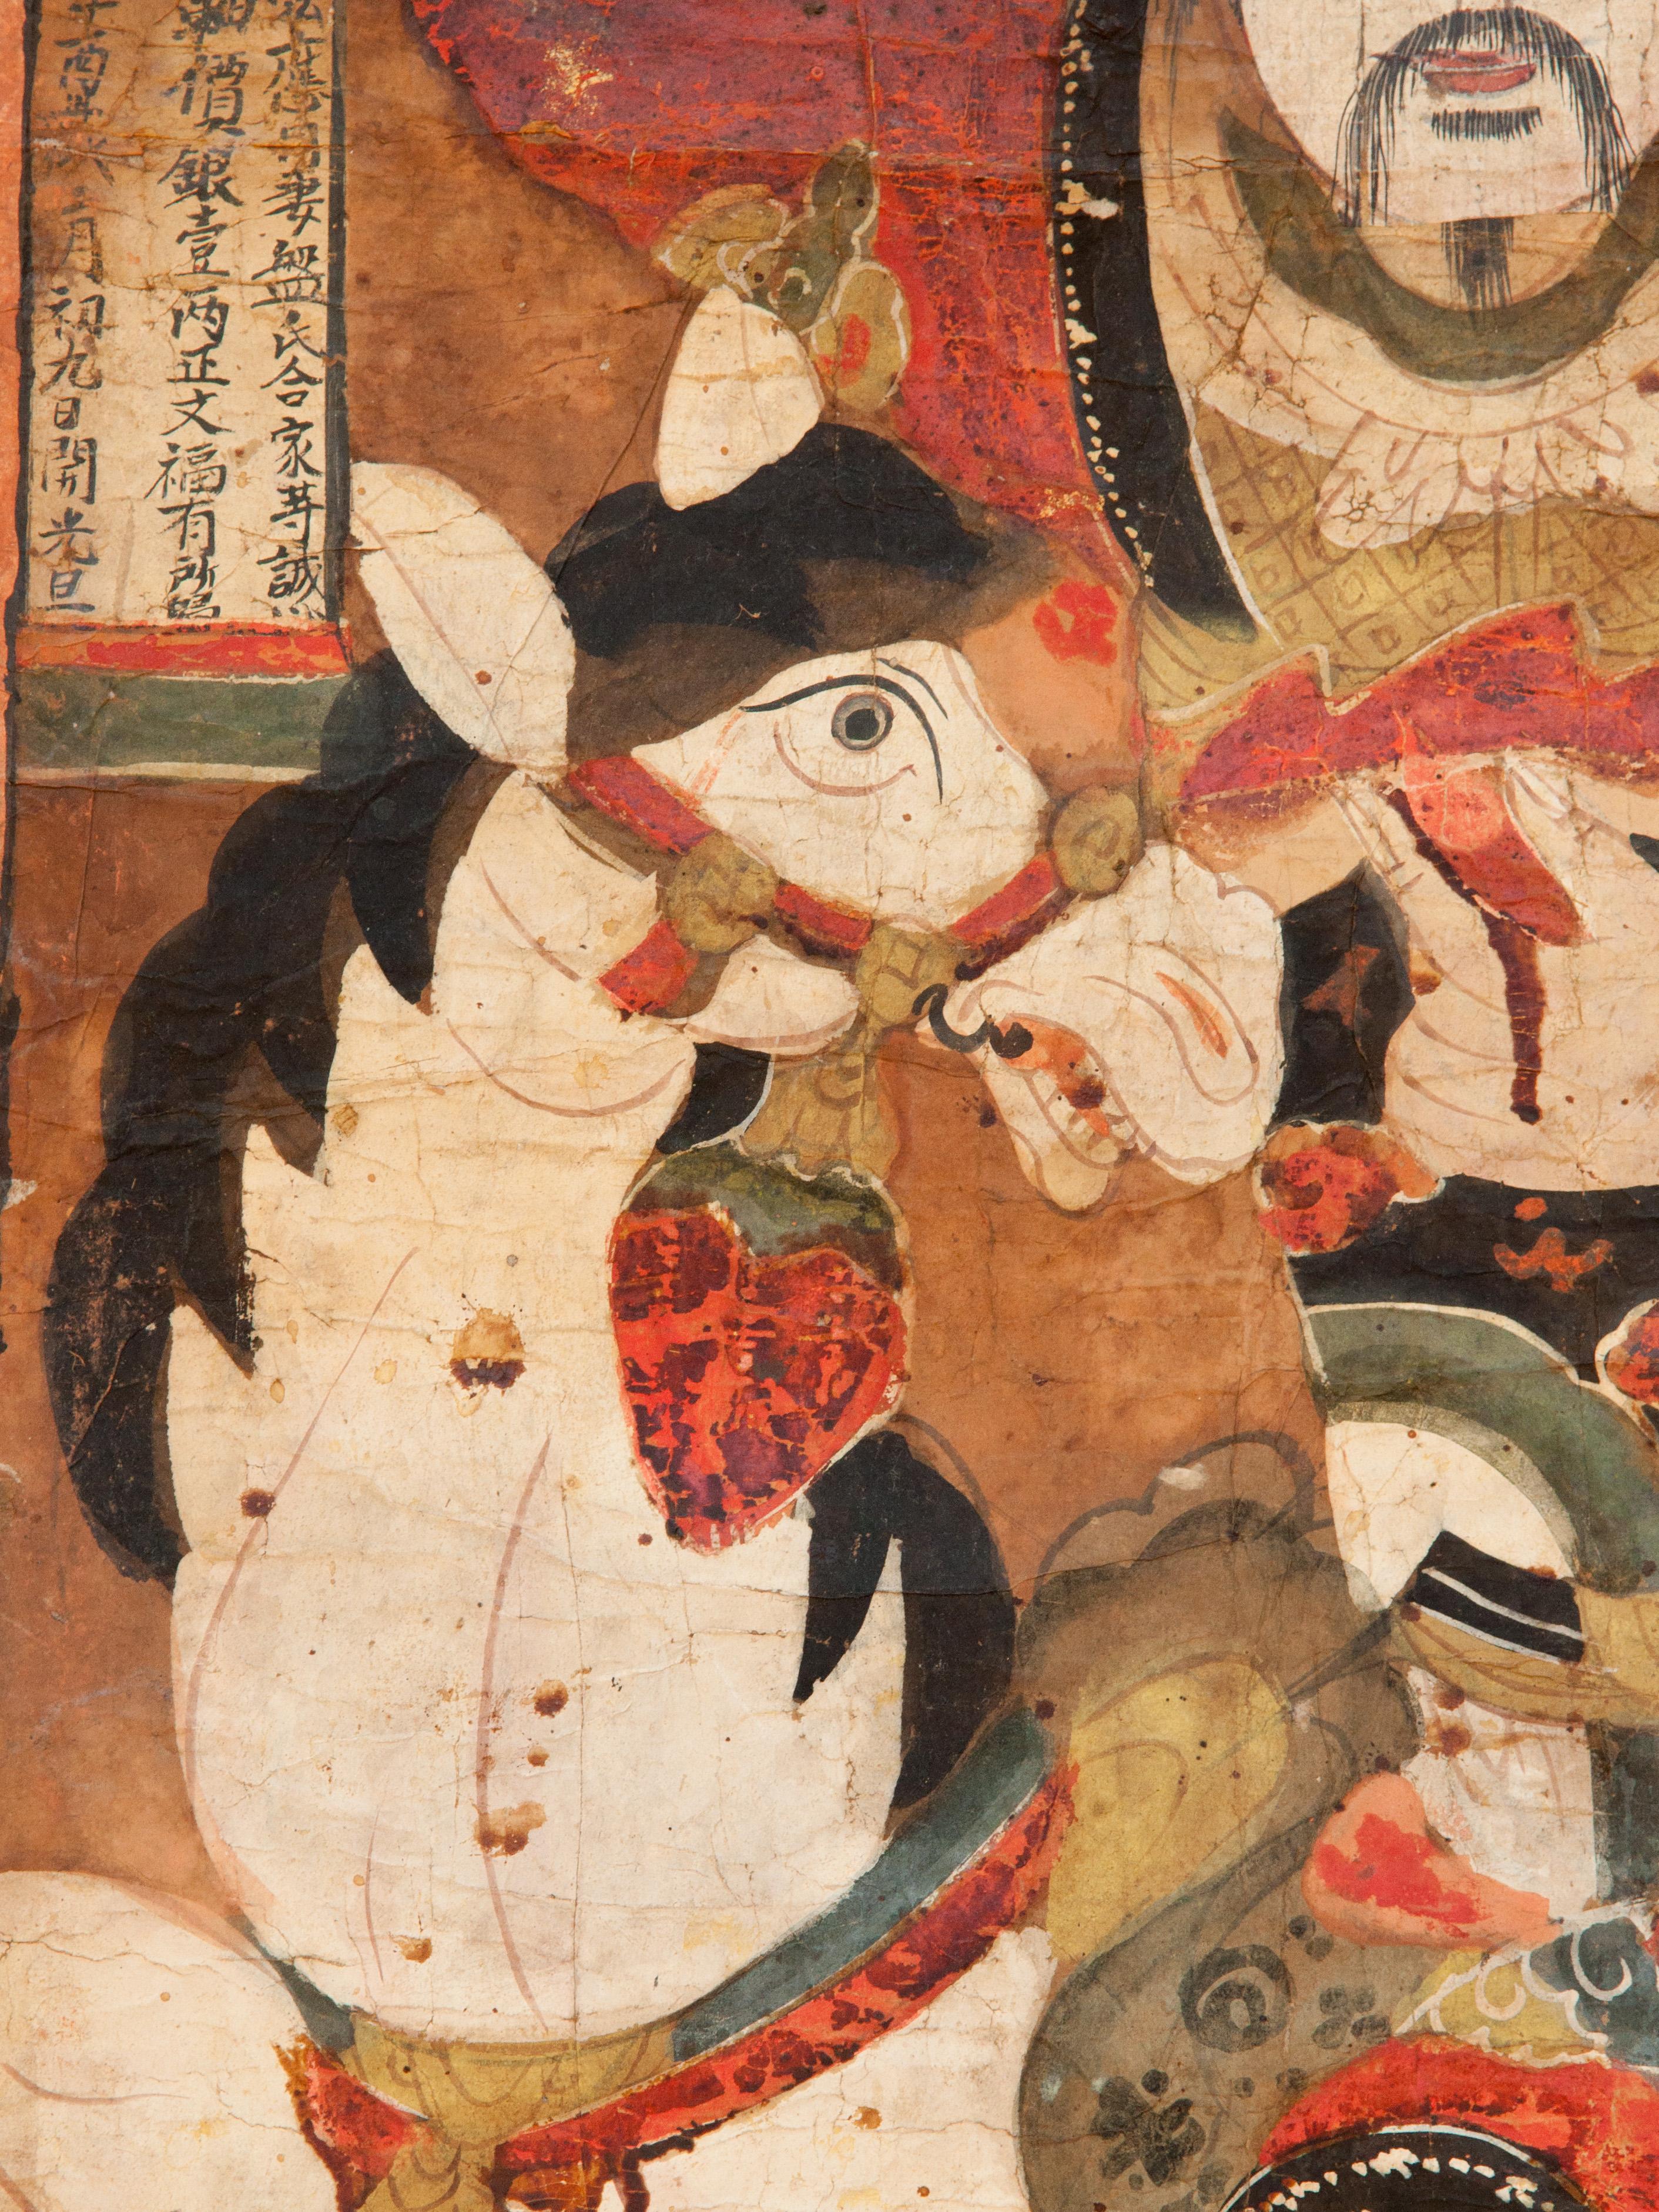 Tribal Yao Ceremonial Painting of Tai Wai, Guizhou, China, Early to Mid-19th Century